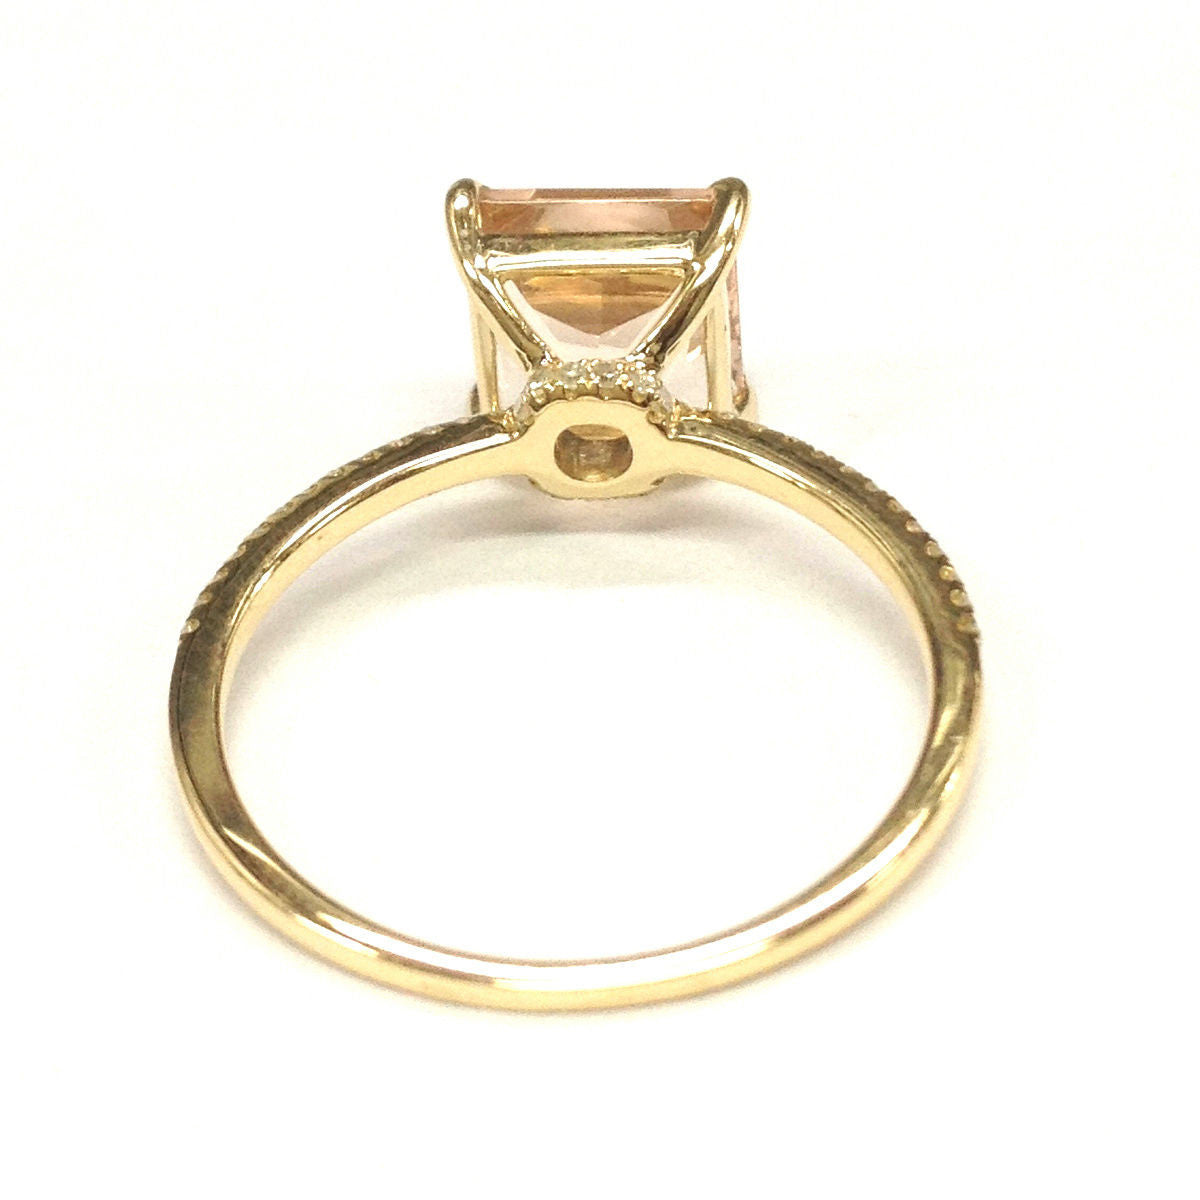 Princess Morganite Engagement Ring Pave Diamond Wedding 14K Yellow Gold 8mm - Lord of Gem Rings - 3